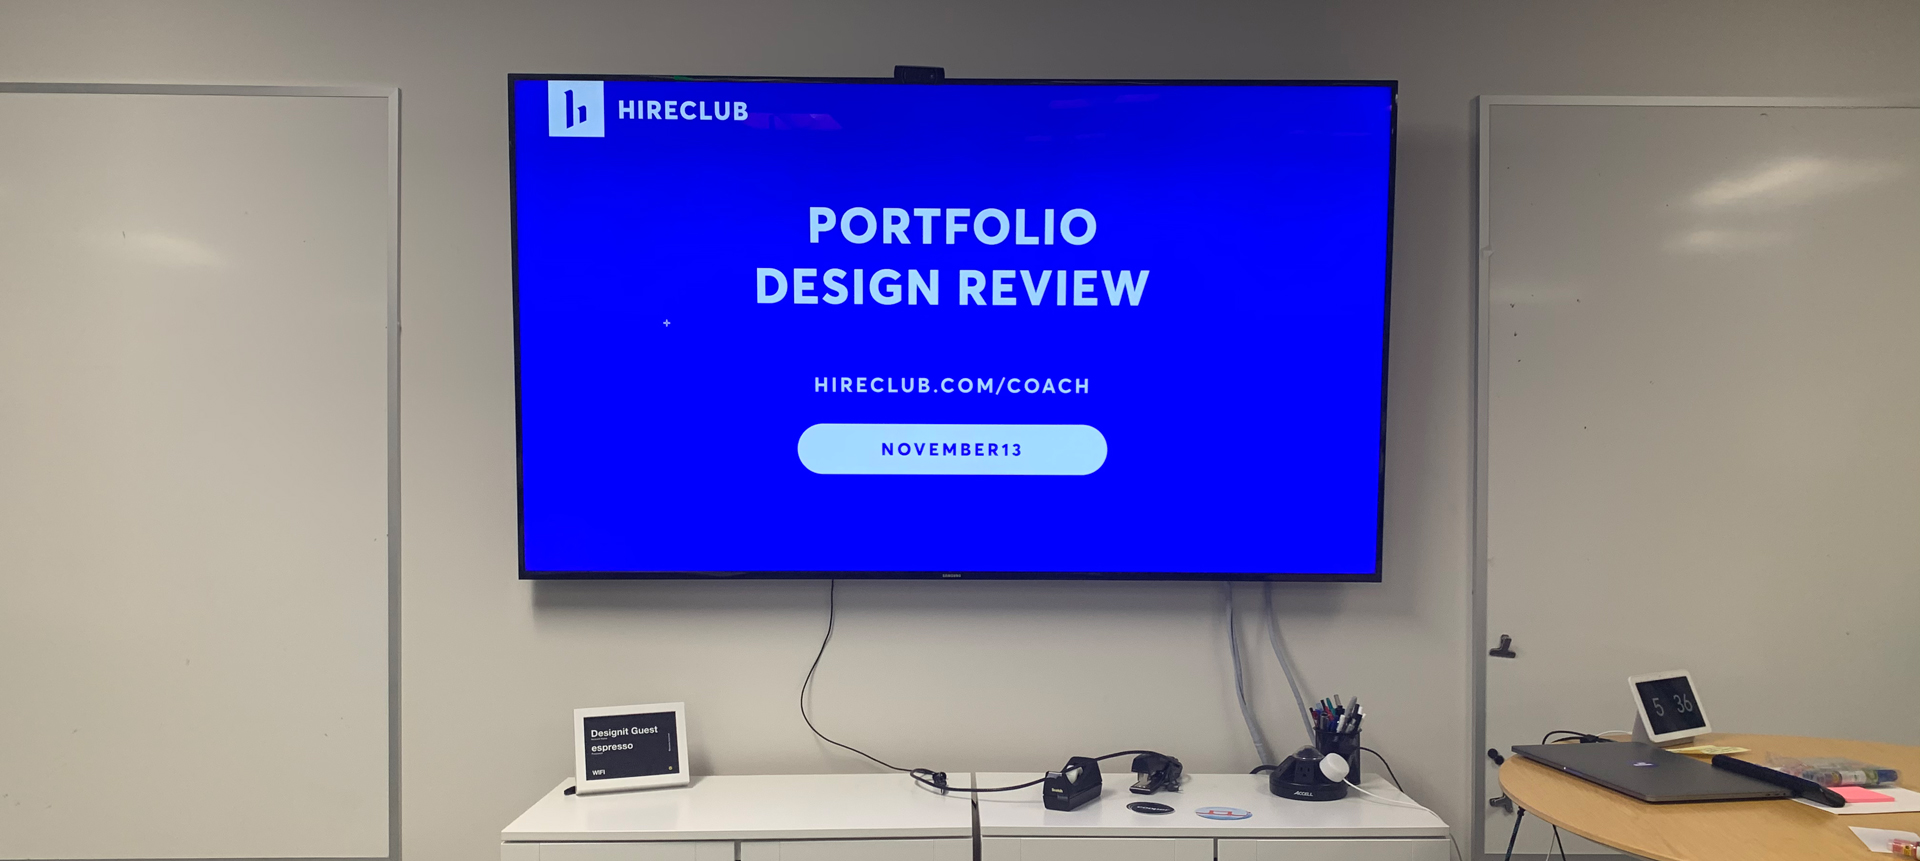 
                A HireClub event hosted at a design firm agency. I designed the slides for a portfolio design review event.